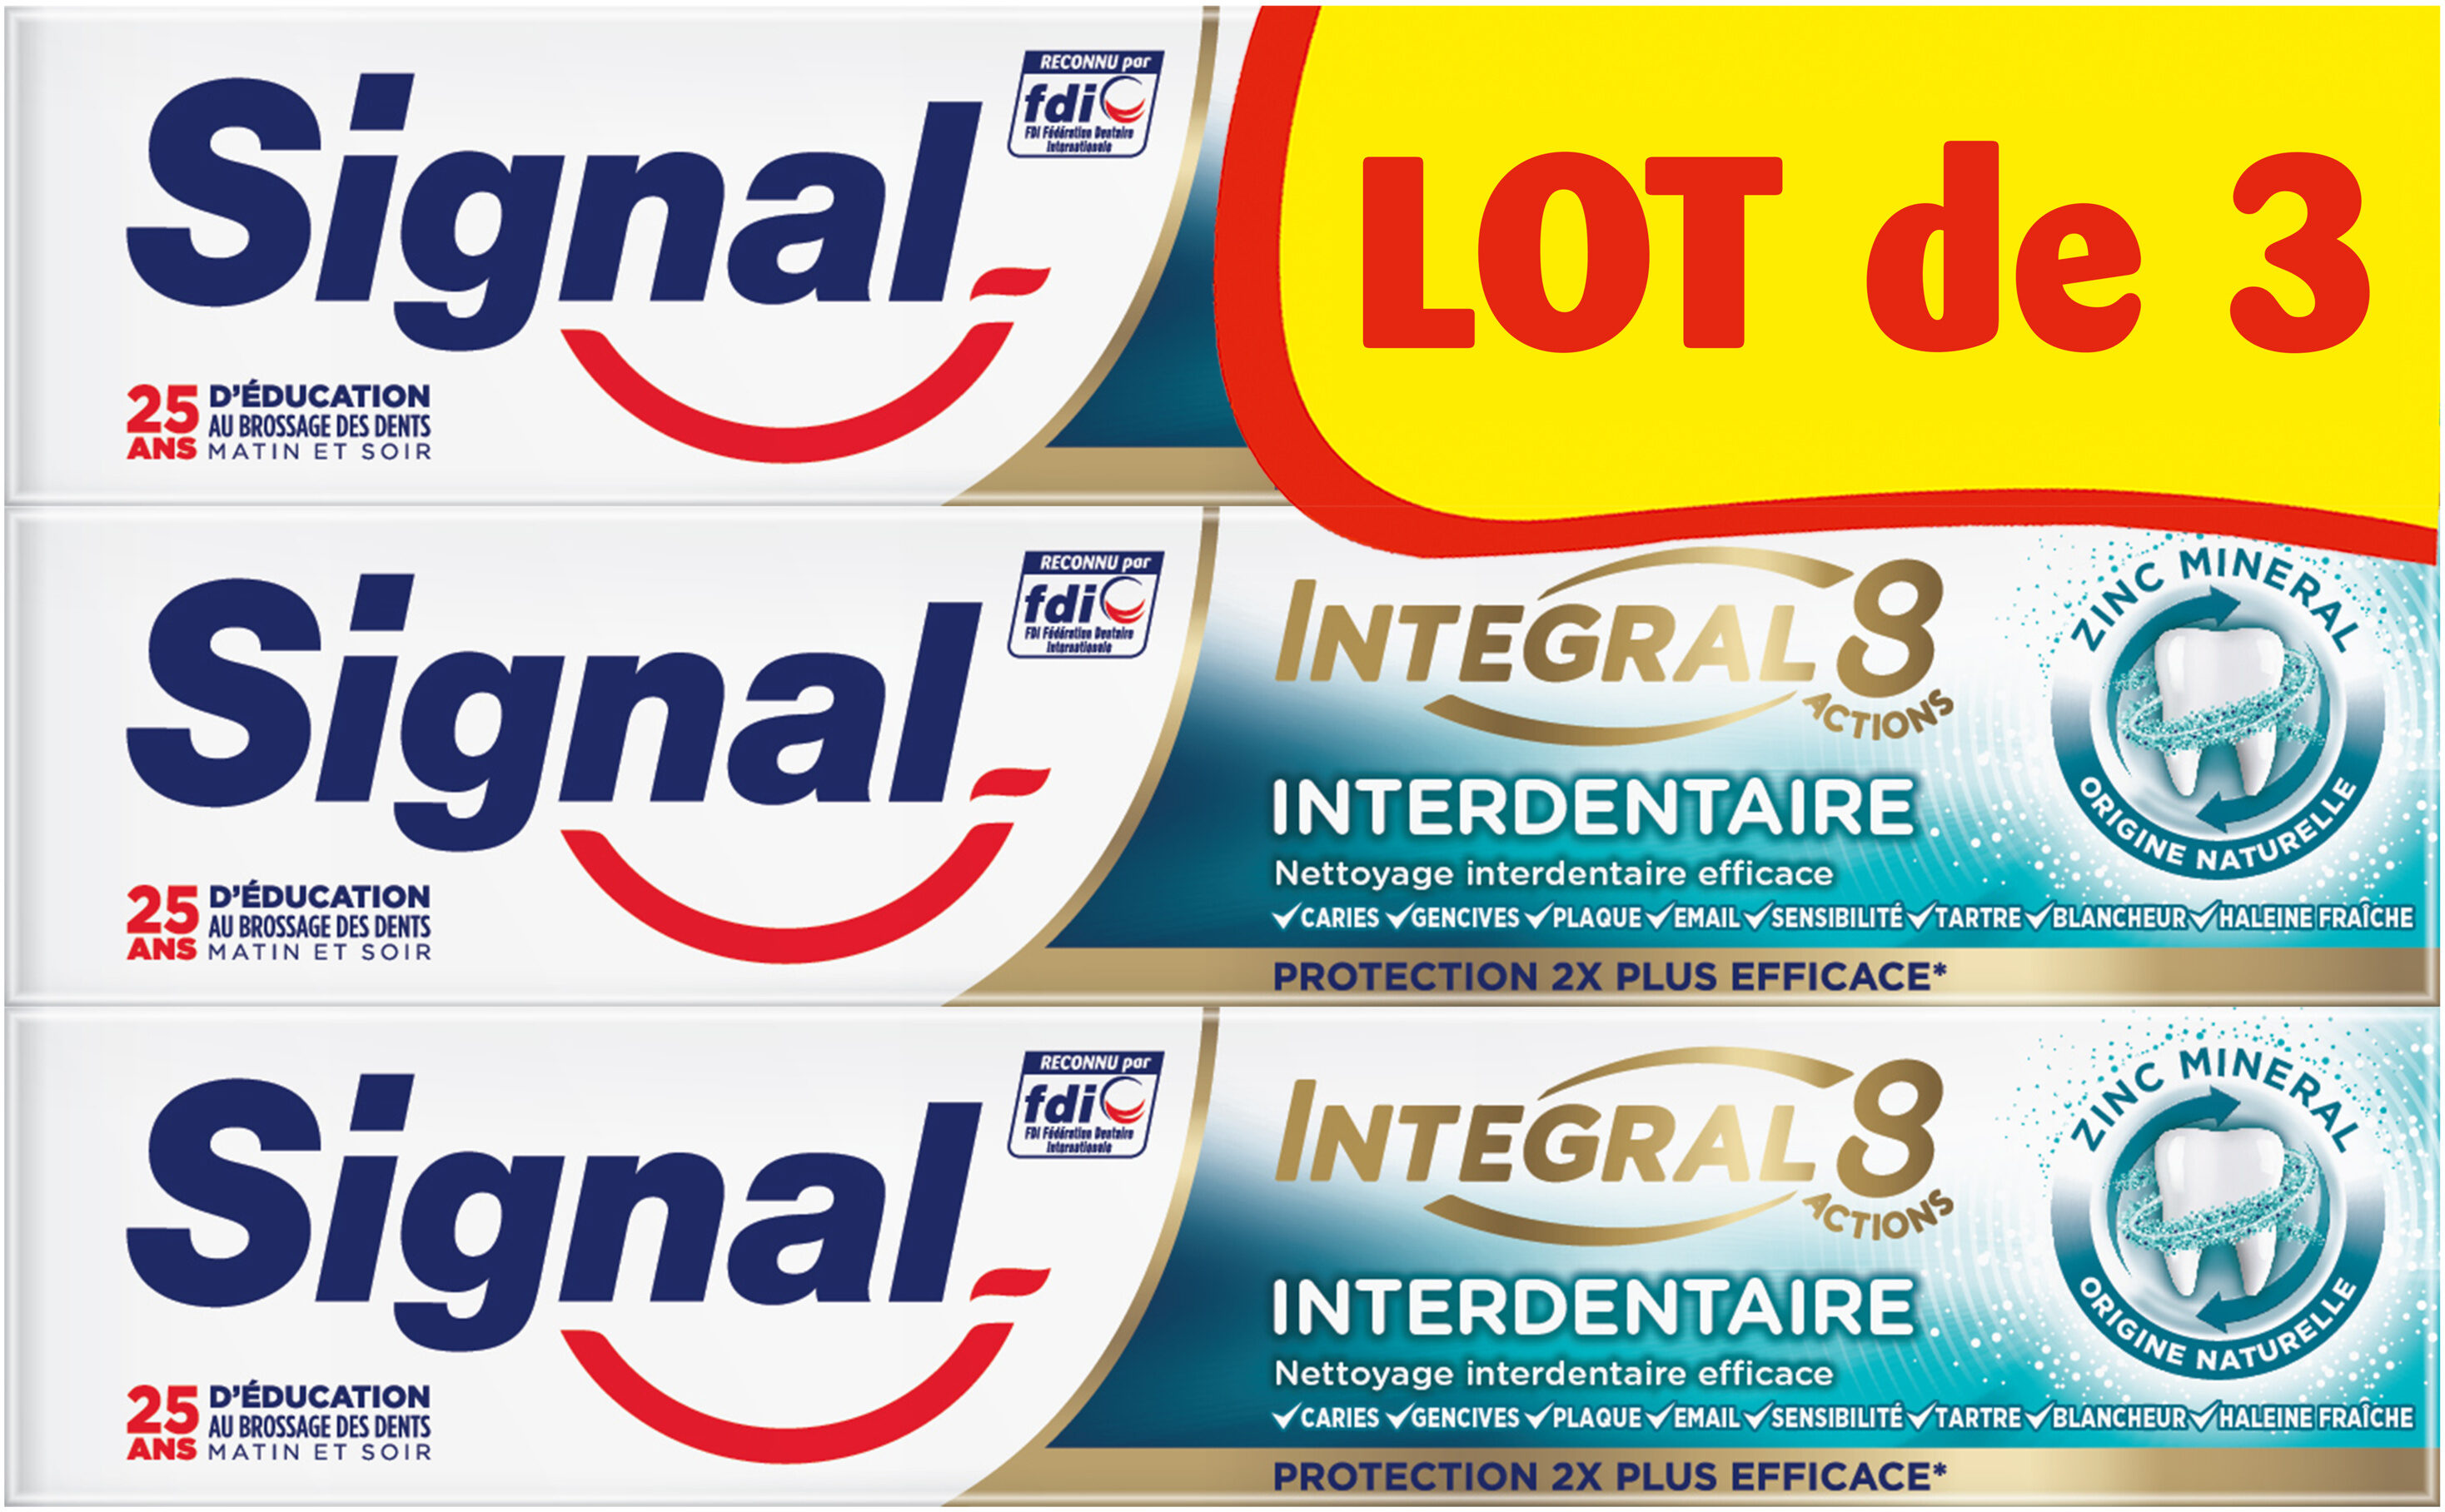 Signal Dentifrice Integral 8 Interdentaire 75ml Lot de 3 - Product - fr